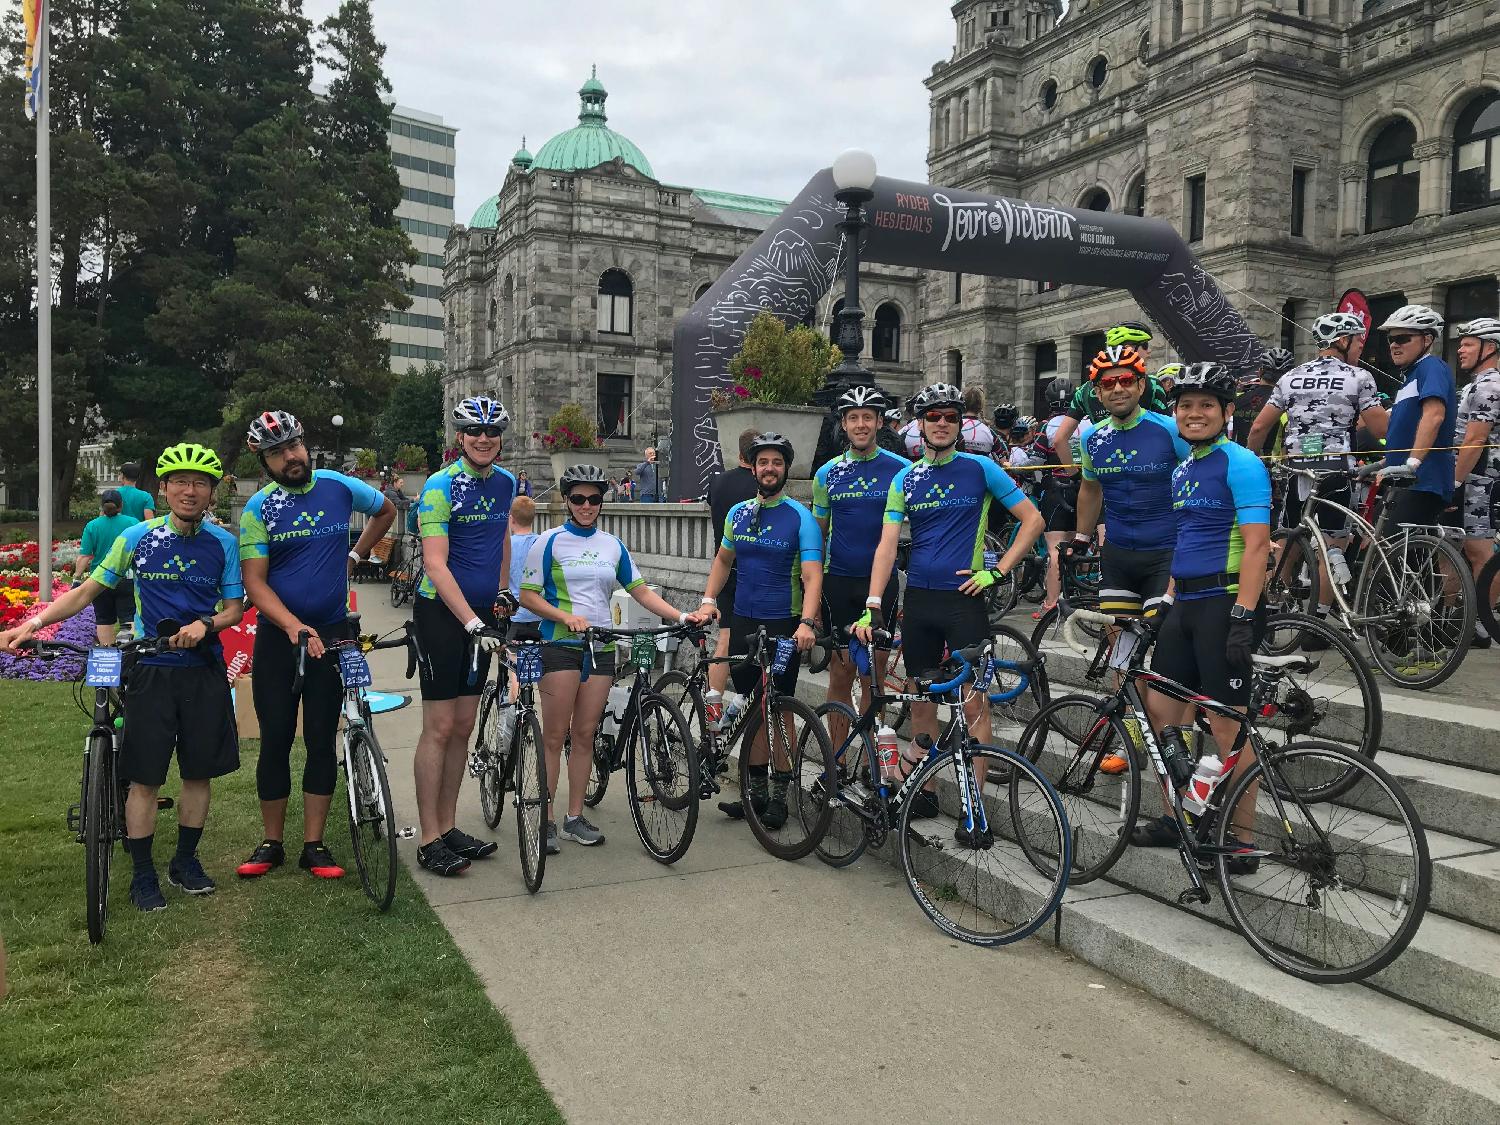 Zymeworks' biking team participating in Tour de Victoria 2019.